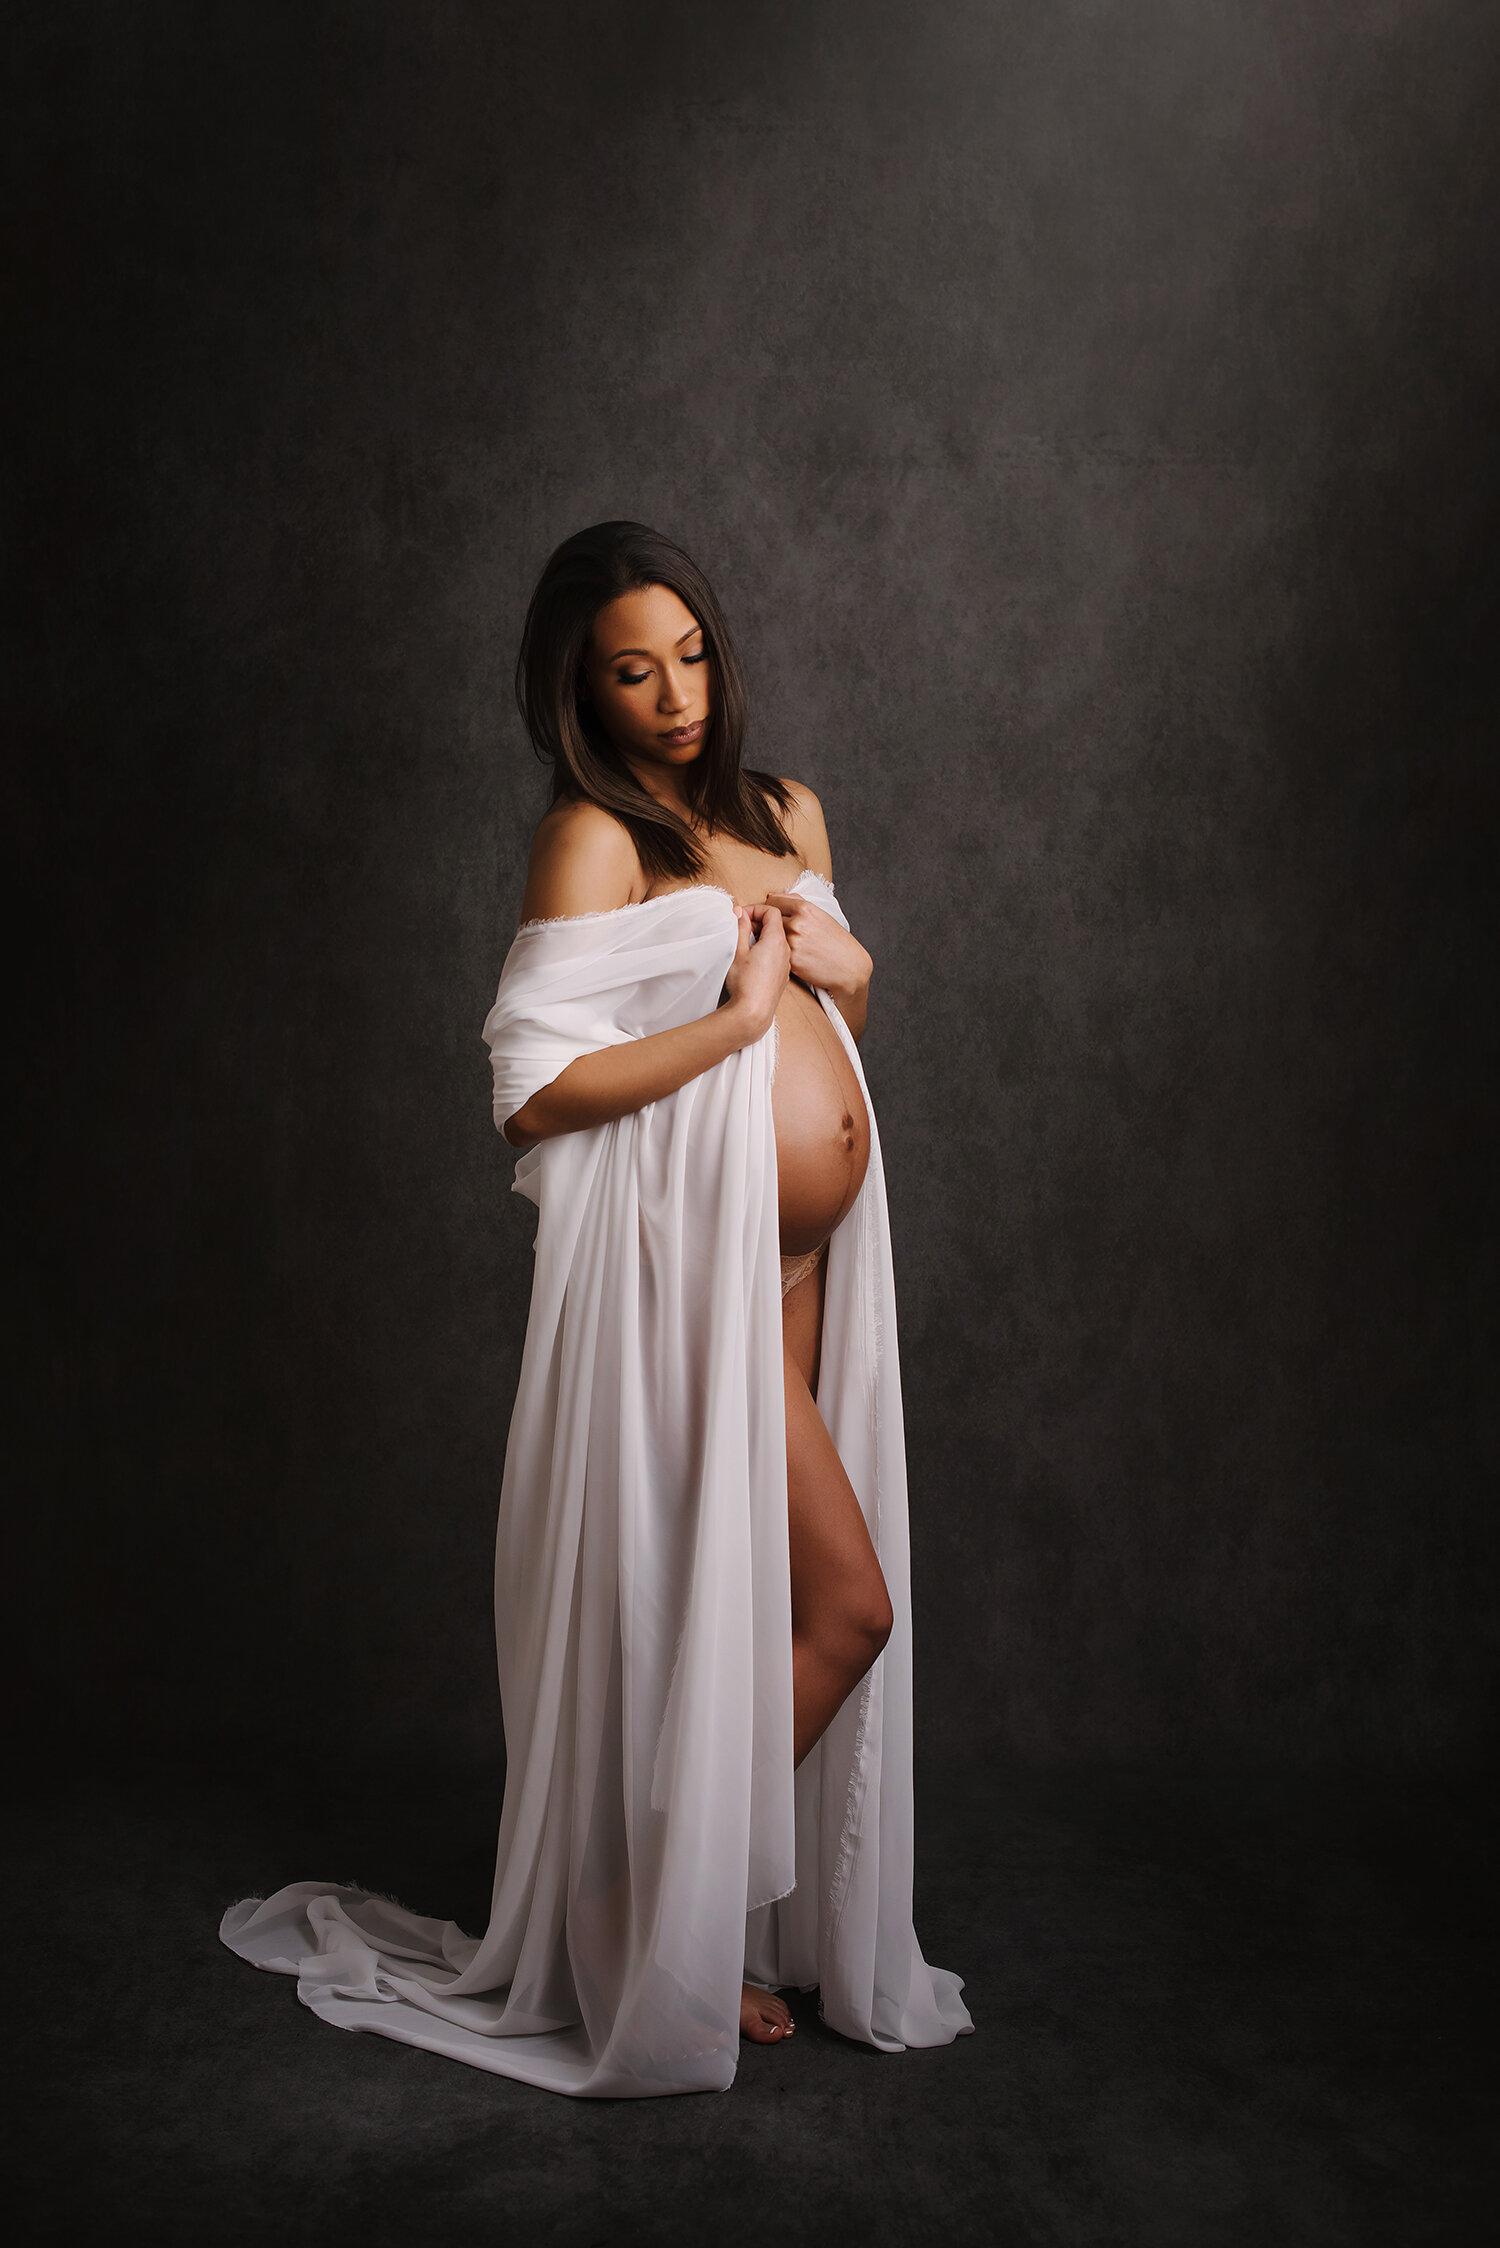 ohio-black-pregnancy-maternity-photographer-columbusohio.jpg